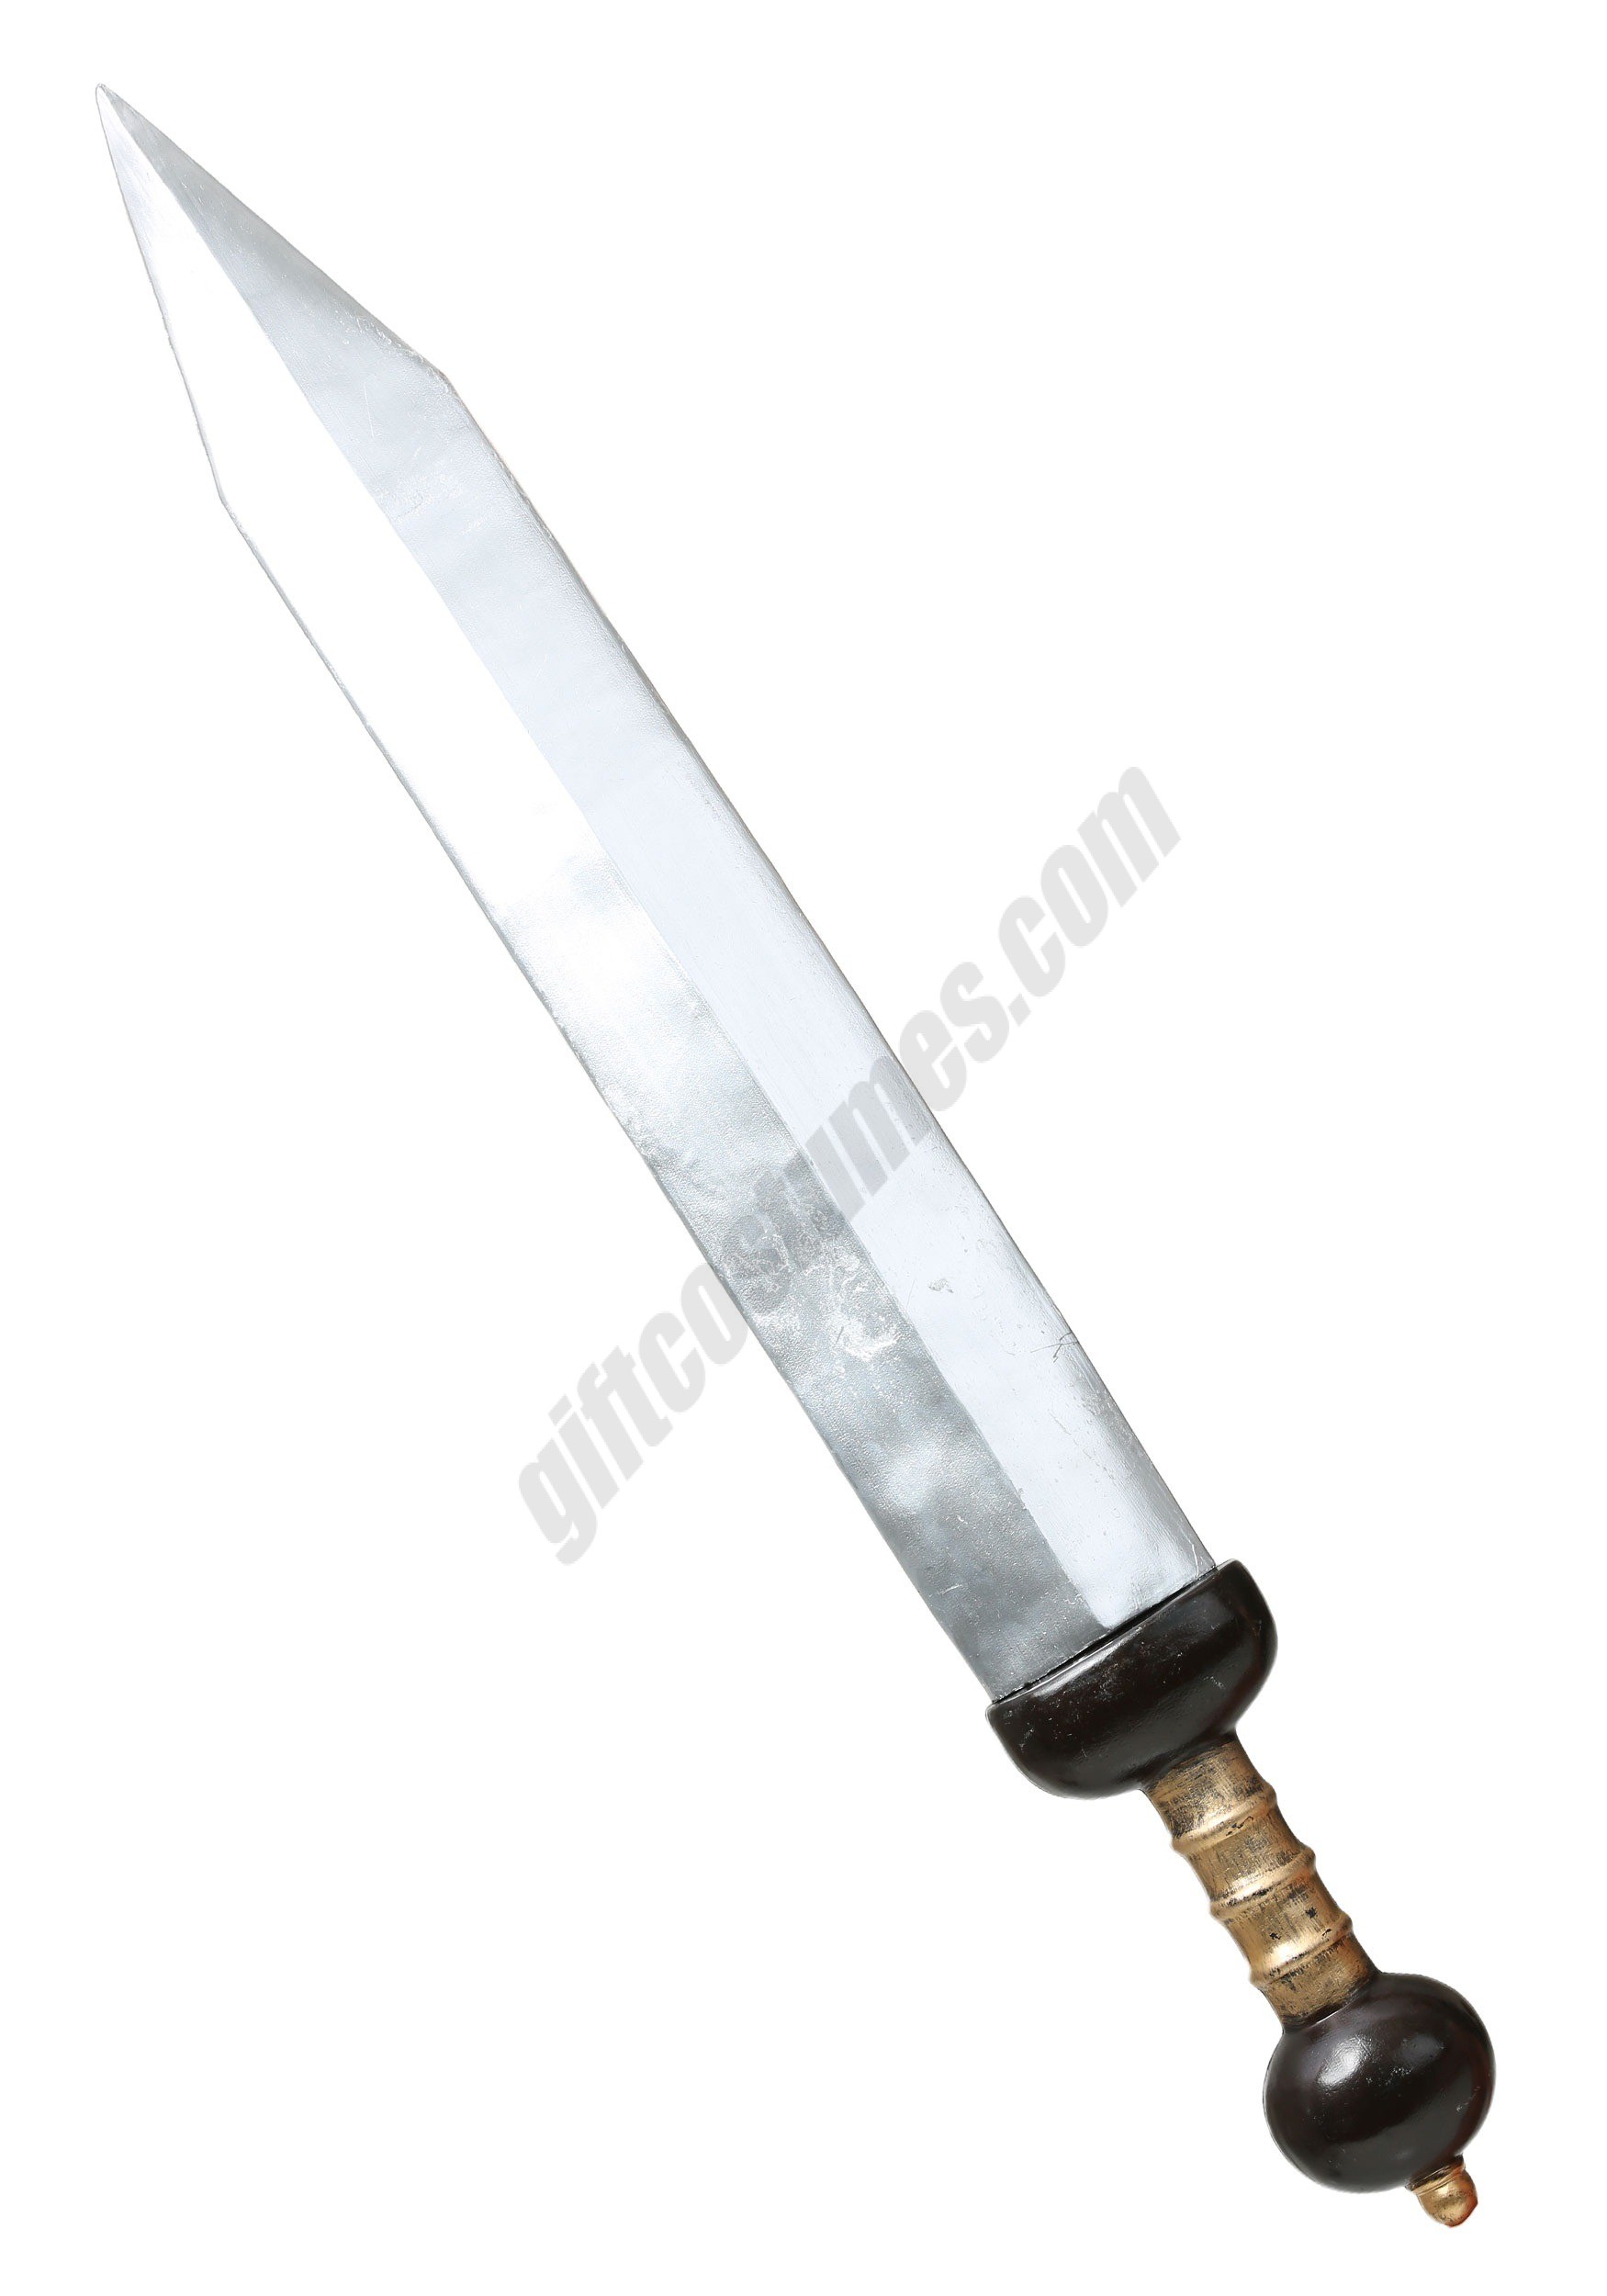 Roman Gladius Sword Promotions - Roman Gladius Sword Promotions